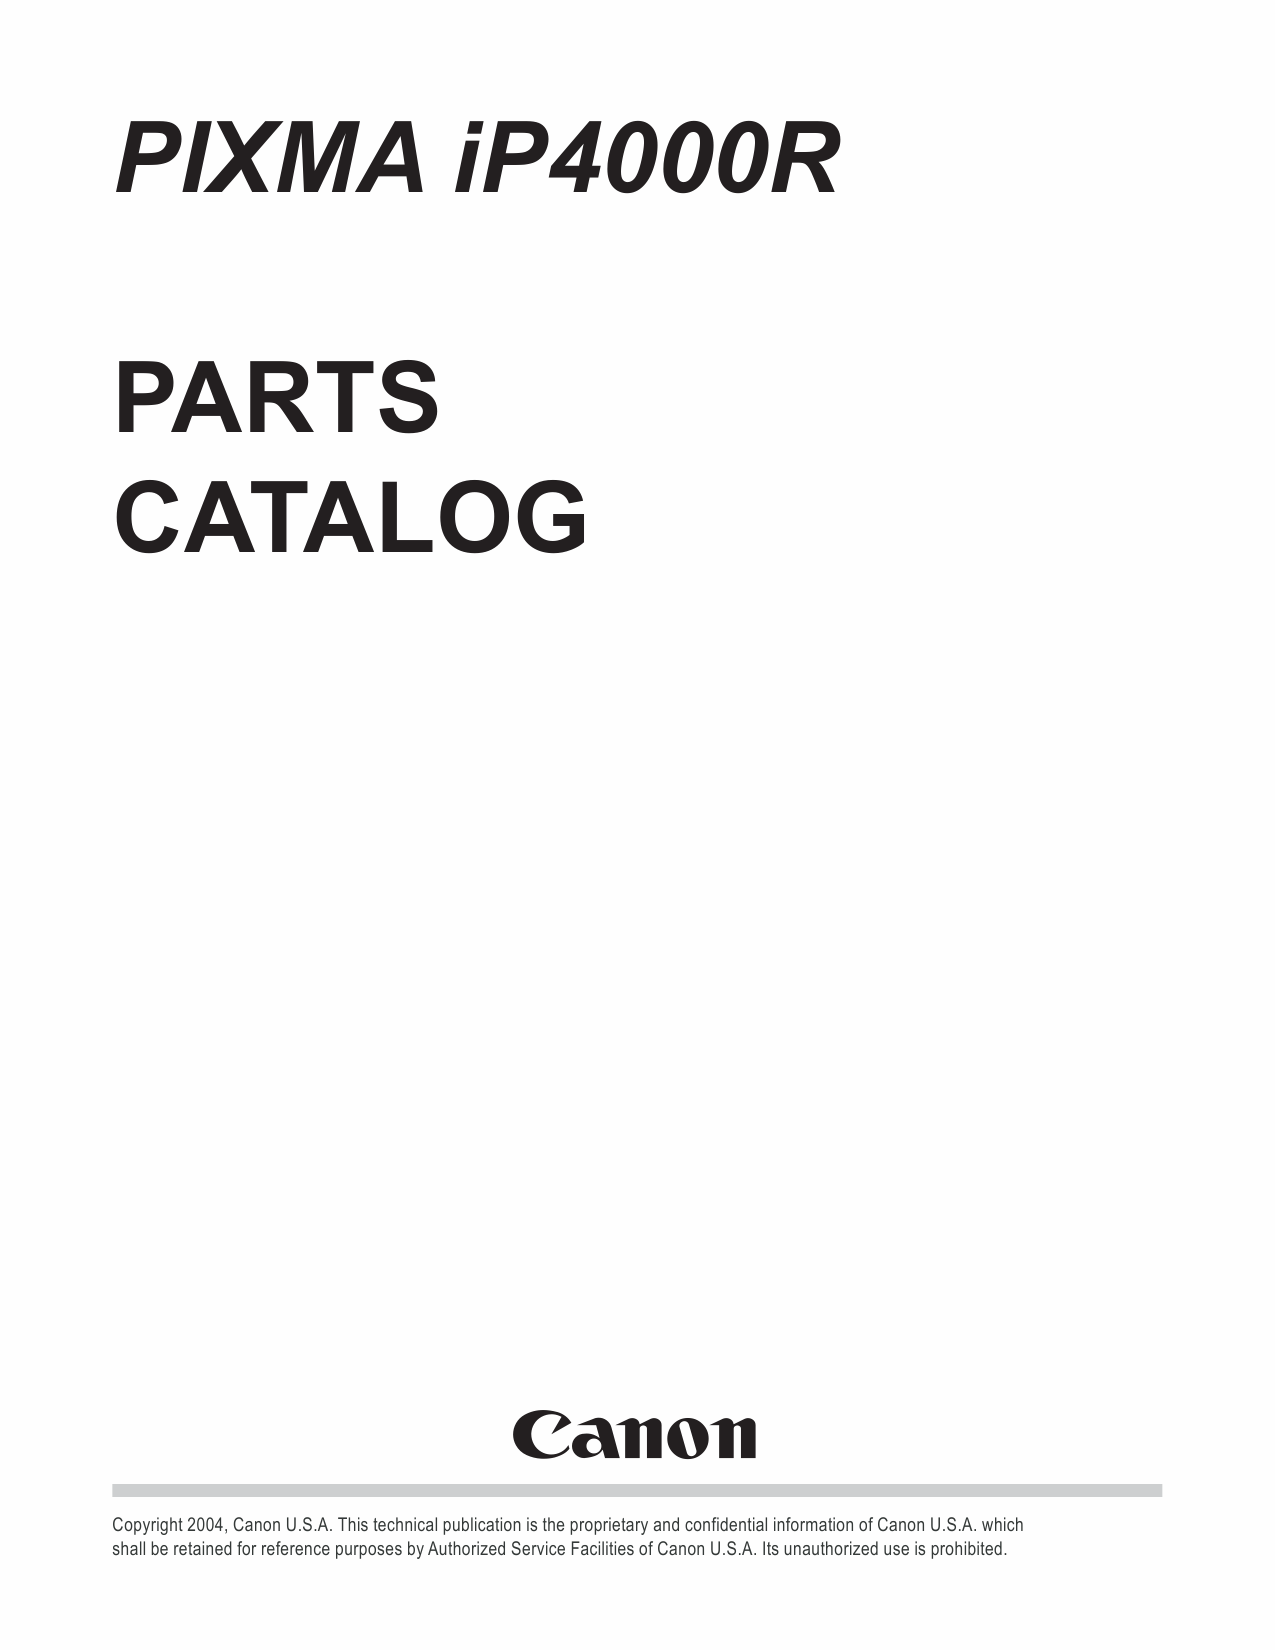 Canon PIXMA iP4000R Parts Catalog-1